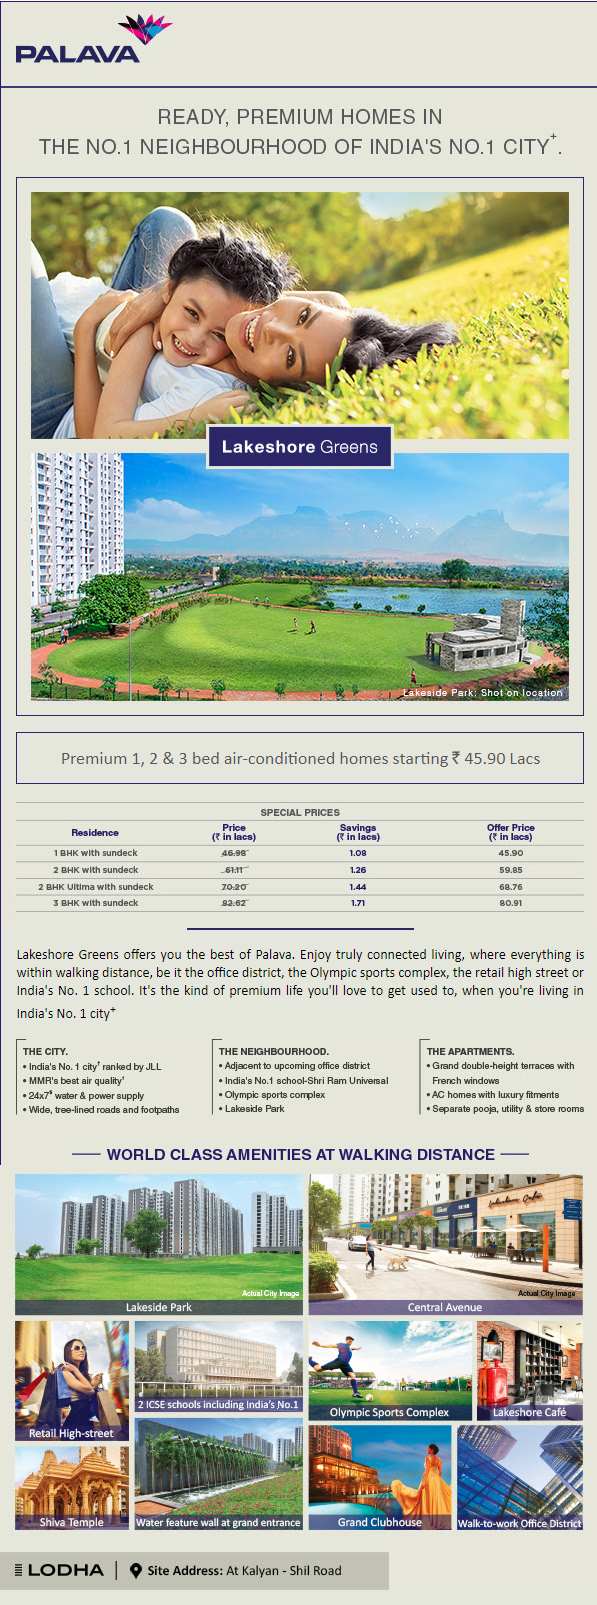 Experience world class amenities at walking distance at Lodha Palava Lakeshore Greens in Mumbai Update